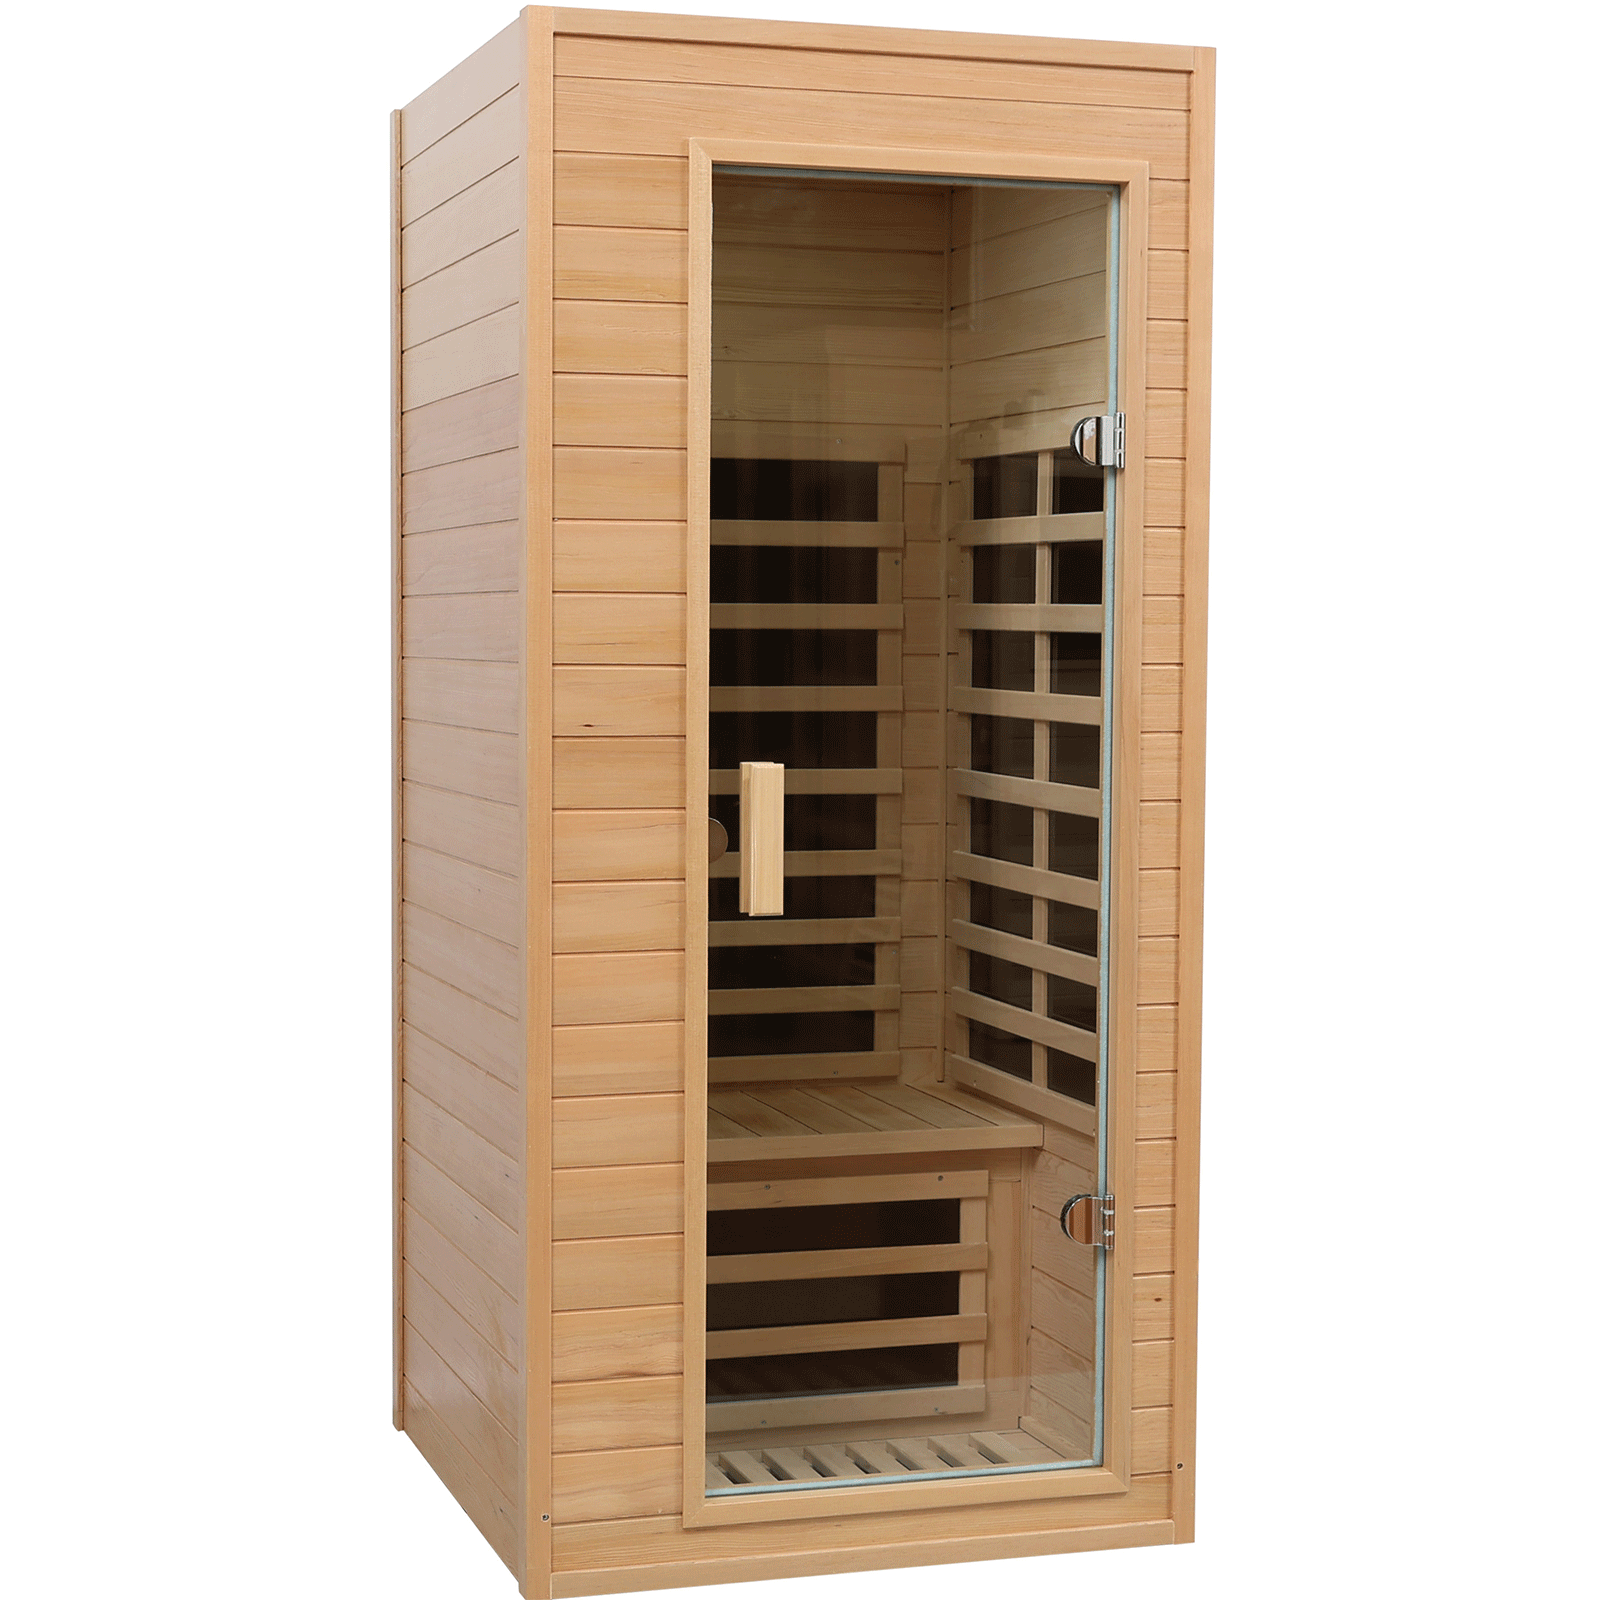 Far Infrared Sauna Home Sauna Spa Room Low-EMF Hemlock Wood Indoor Saunas